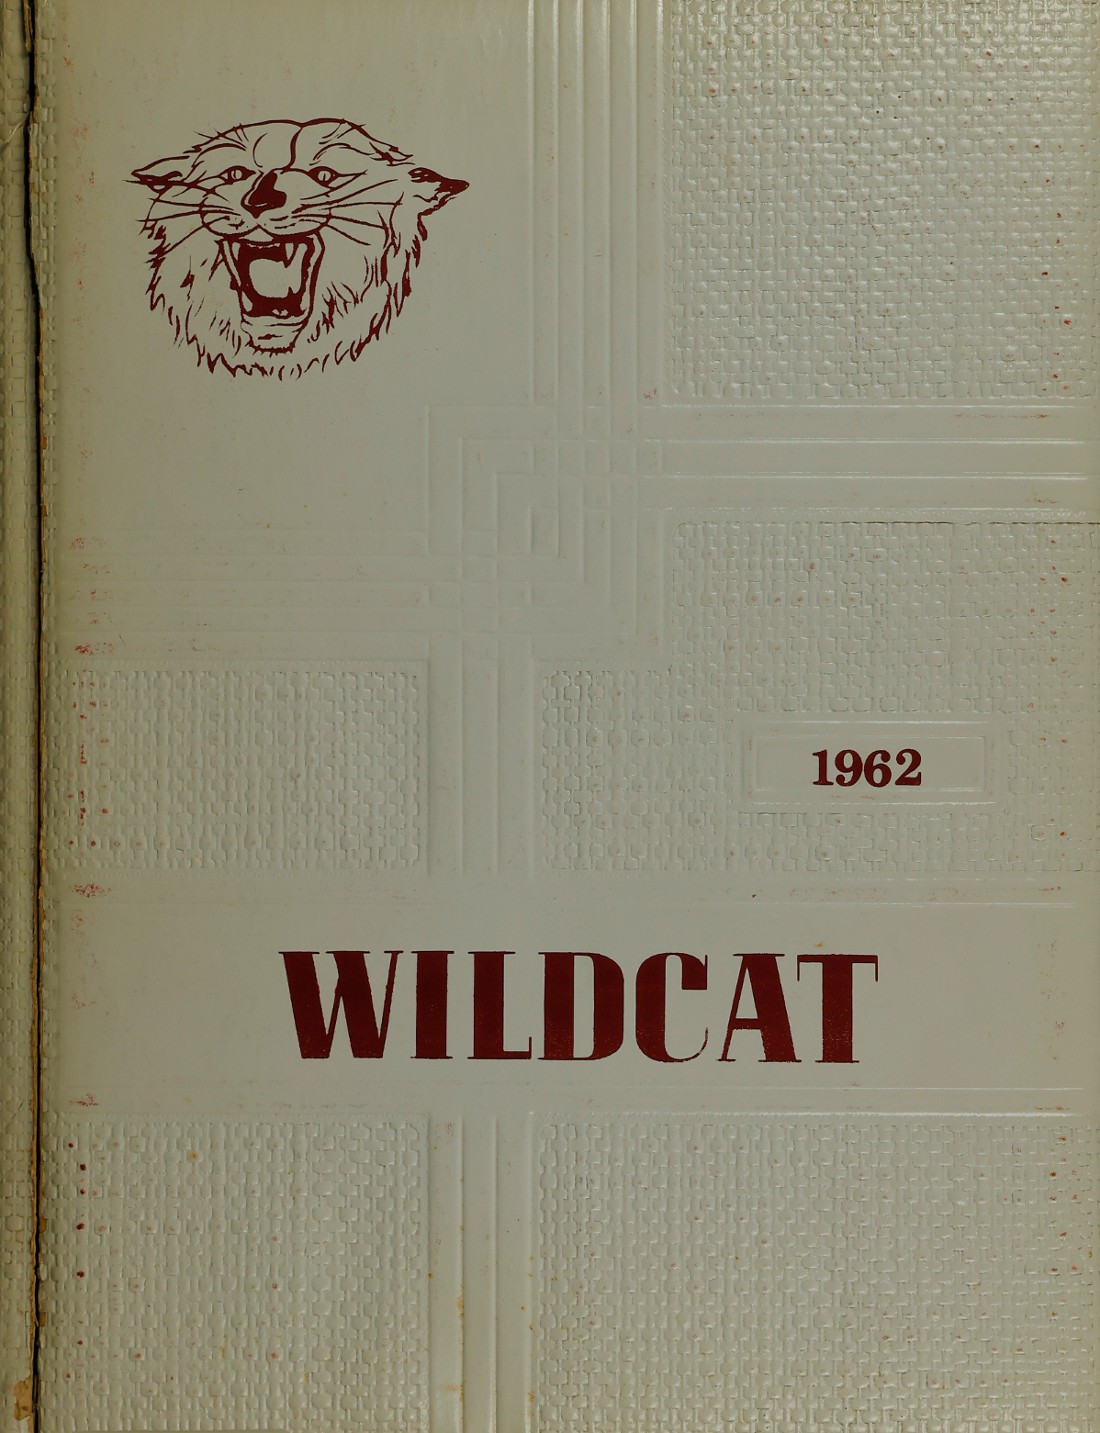 1962 yearbook from Cunningham High School from Cunningham, Kansas